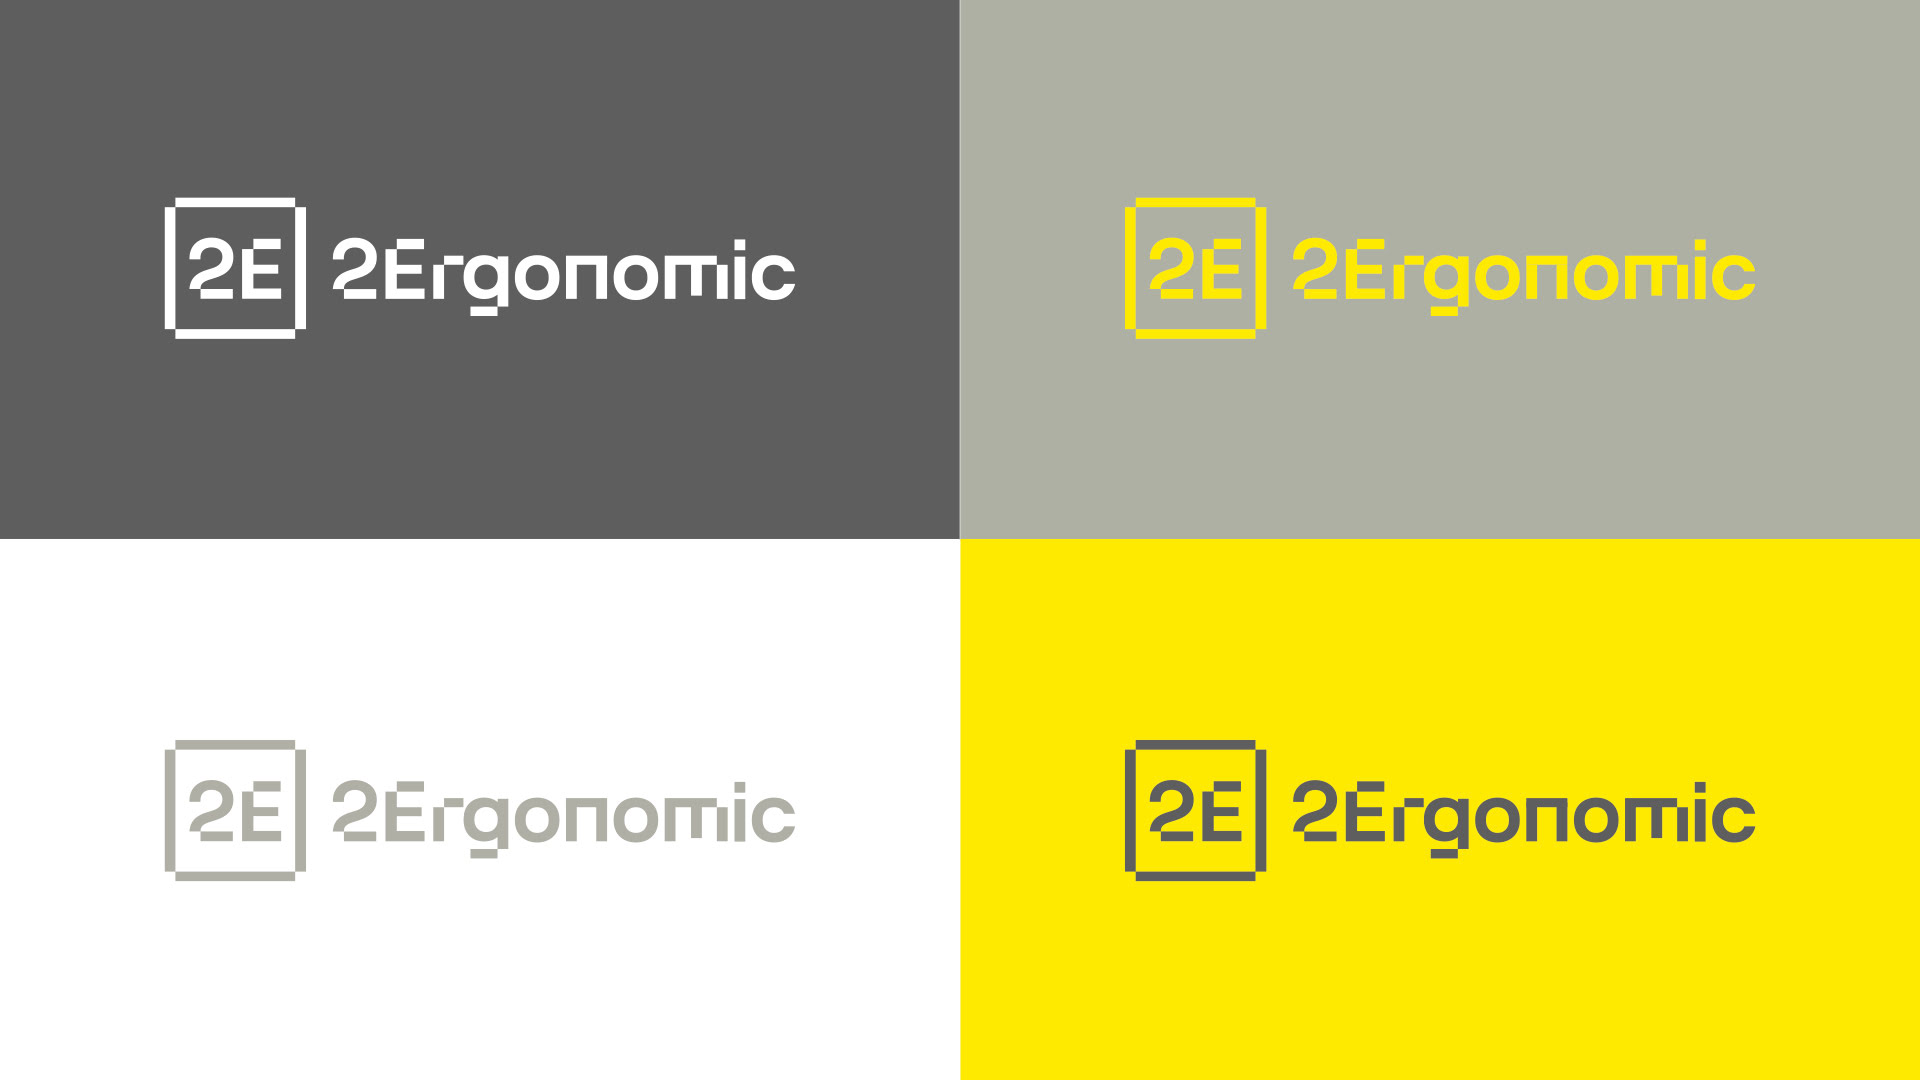 2Ergo color combination style